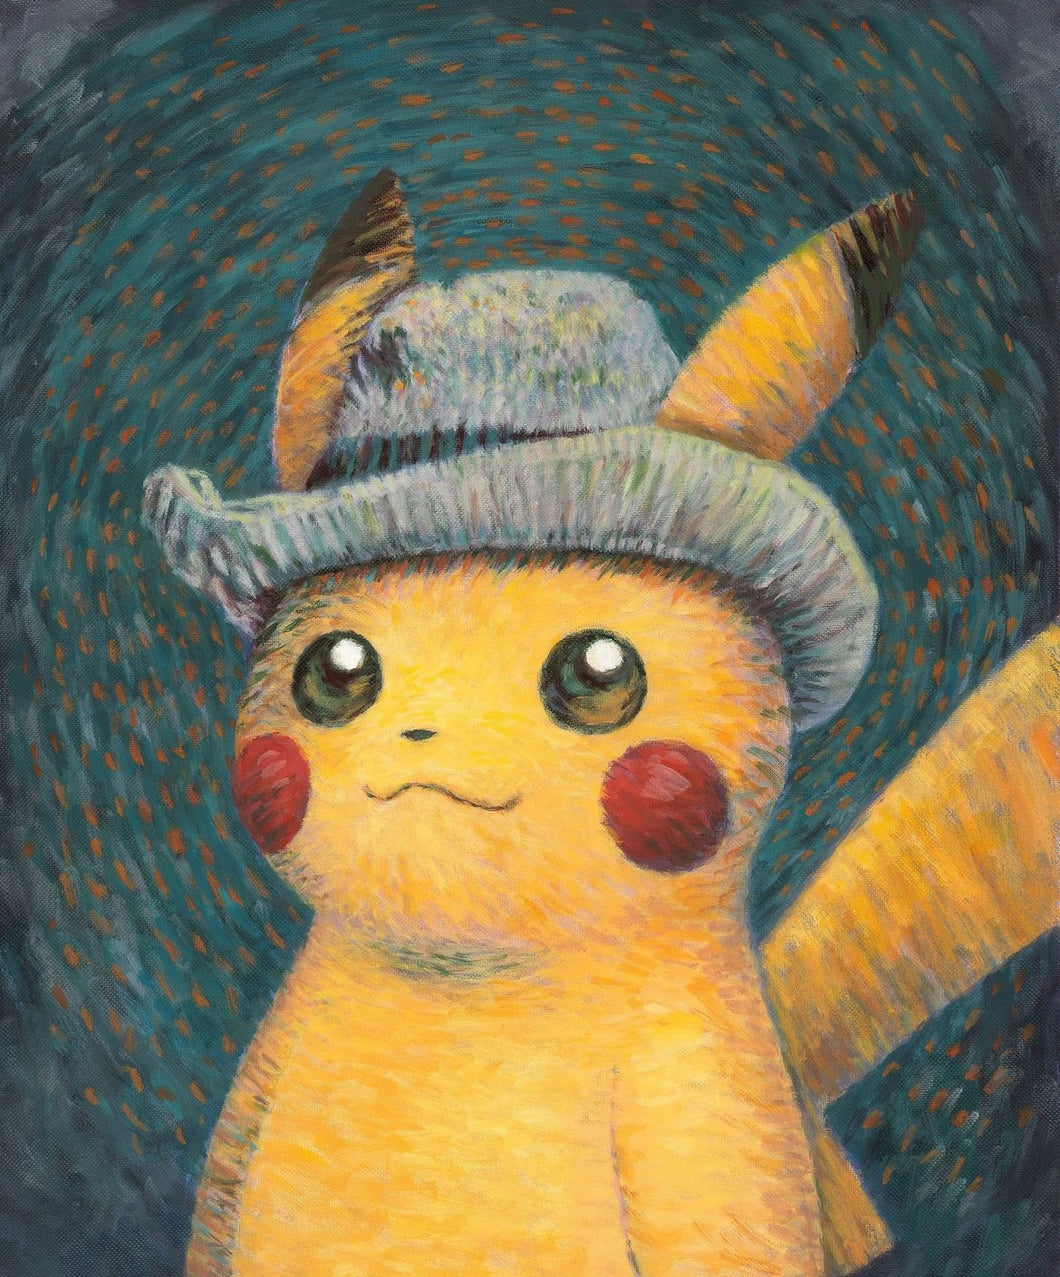 Pokémon - Pikachu inspired by Self-portrait with Grey Felt Hat (Small Canvas) (Pokémon centre x Van Gogh Museum)